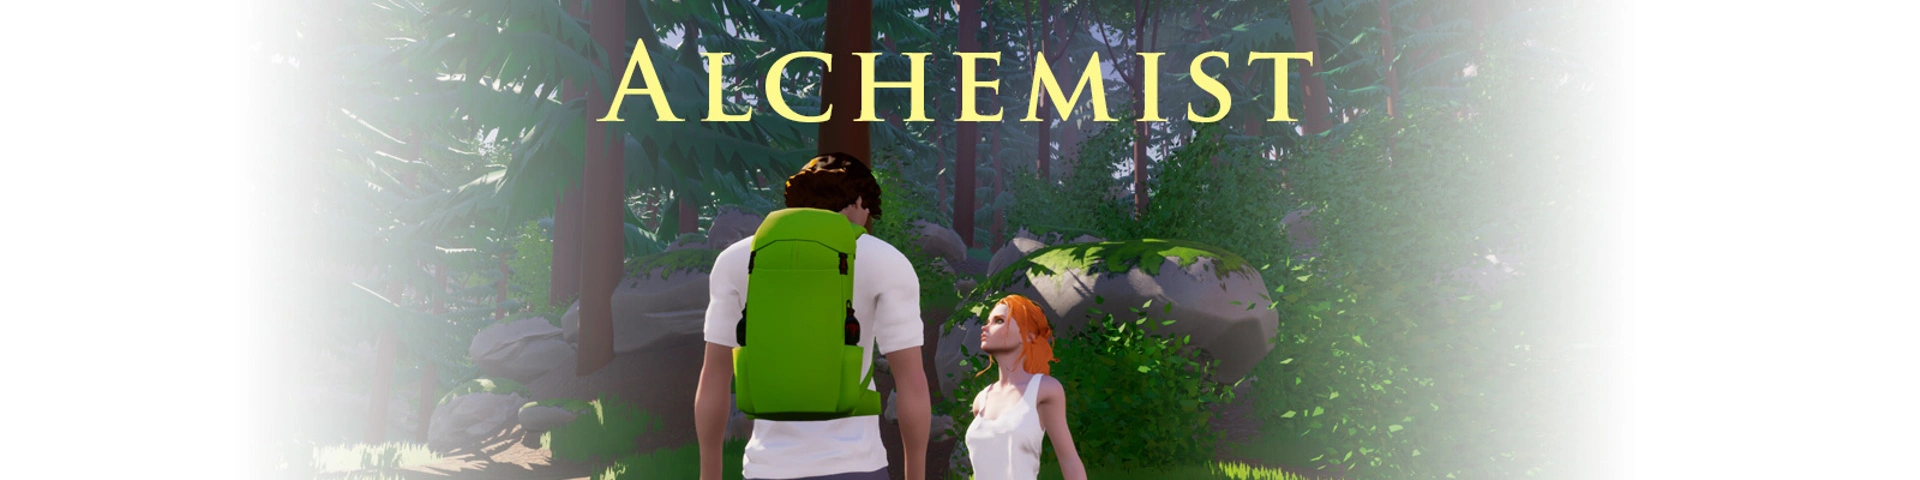 Alchemist [v0.0.7] main image